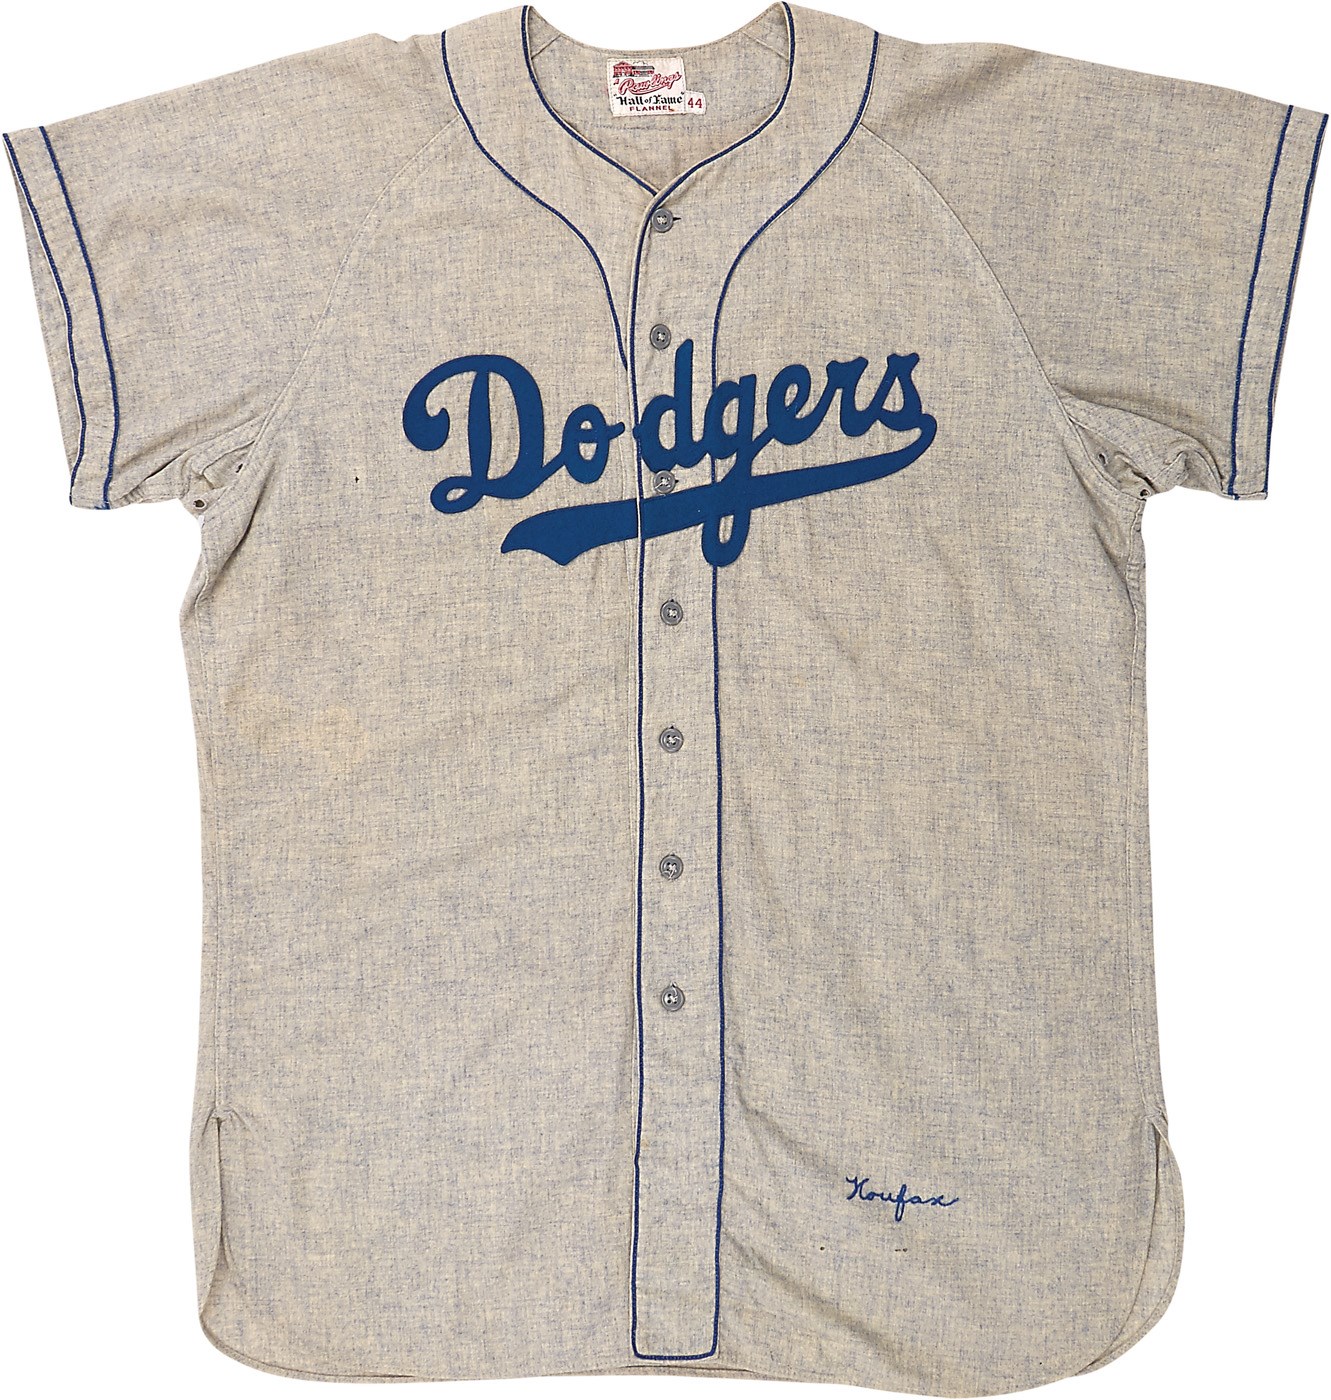 Jackie Robinson & Brooklyn Dodgers - 1955 Sandy Koufax Brooklyn Dodgers Rookie Jersey - Photo-Matched (MEARS 9.5)